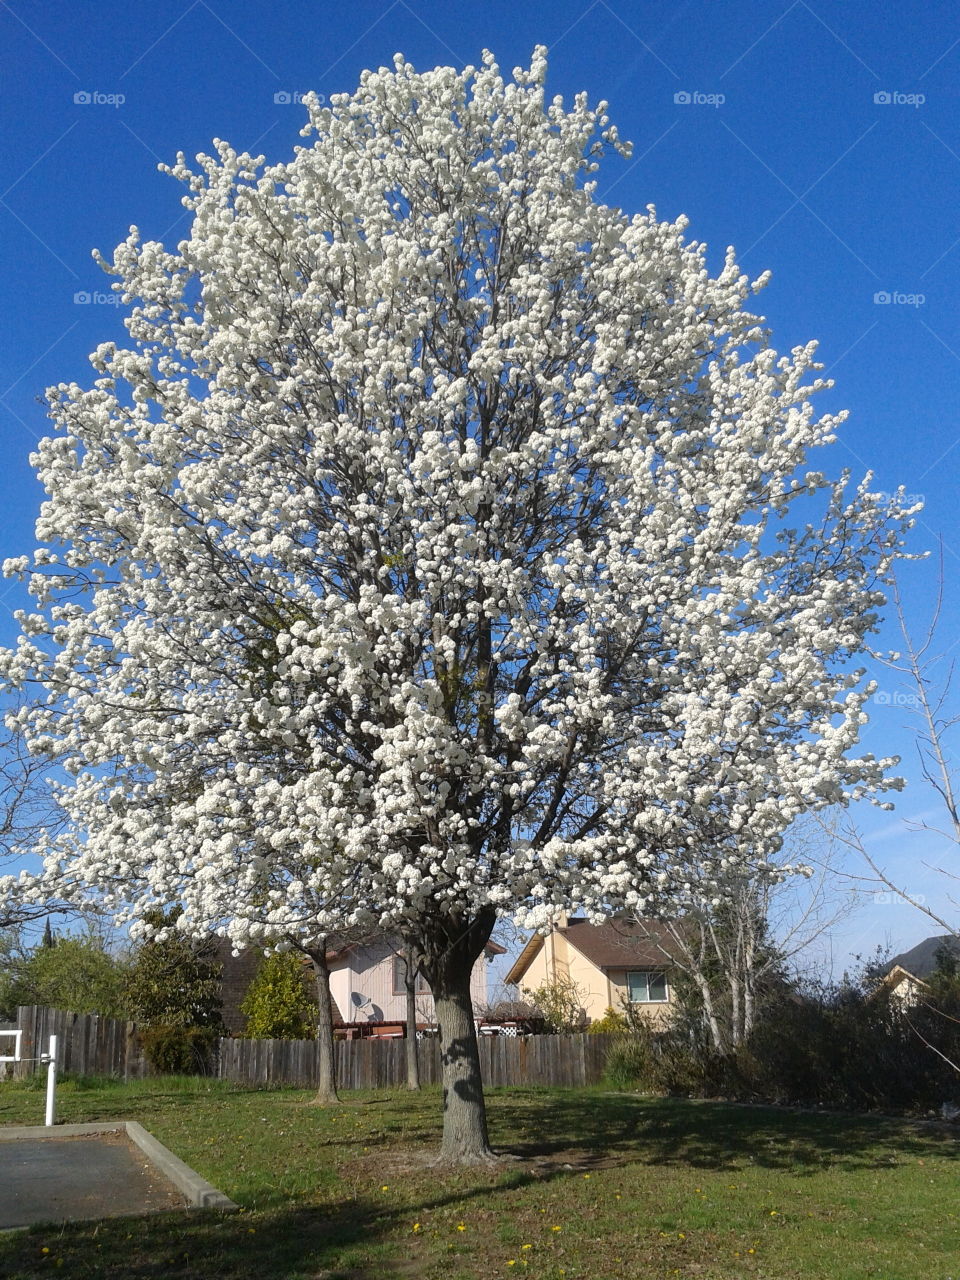 Cotton Looking Tree